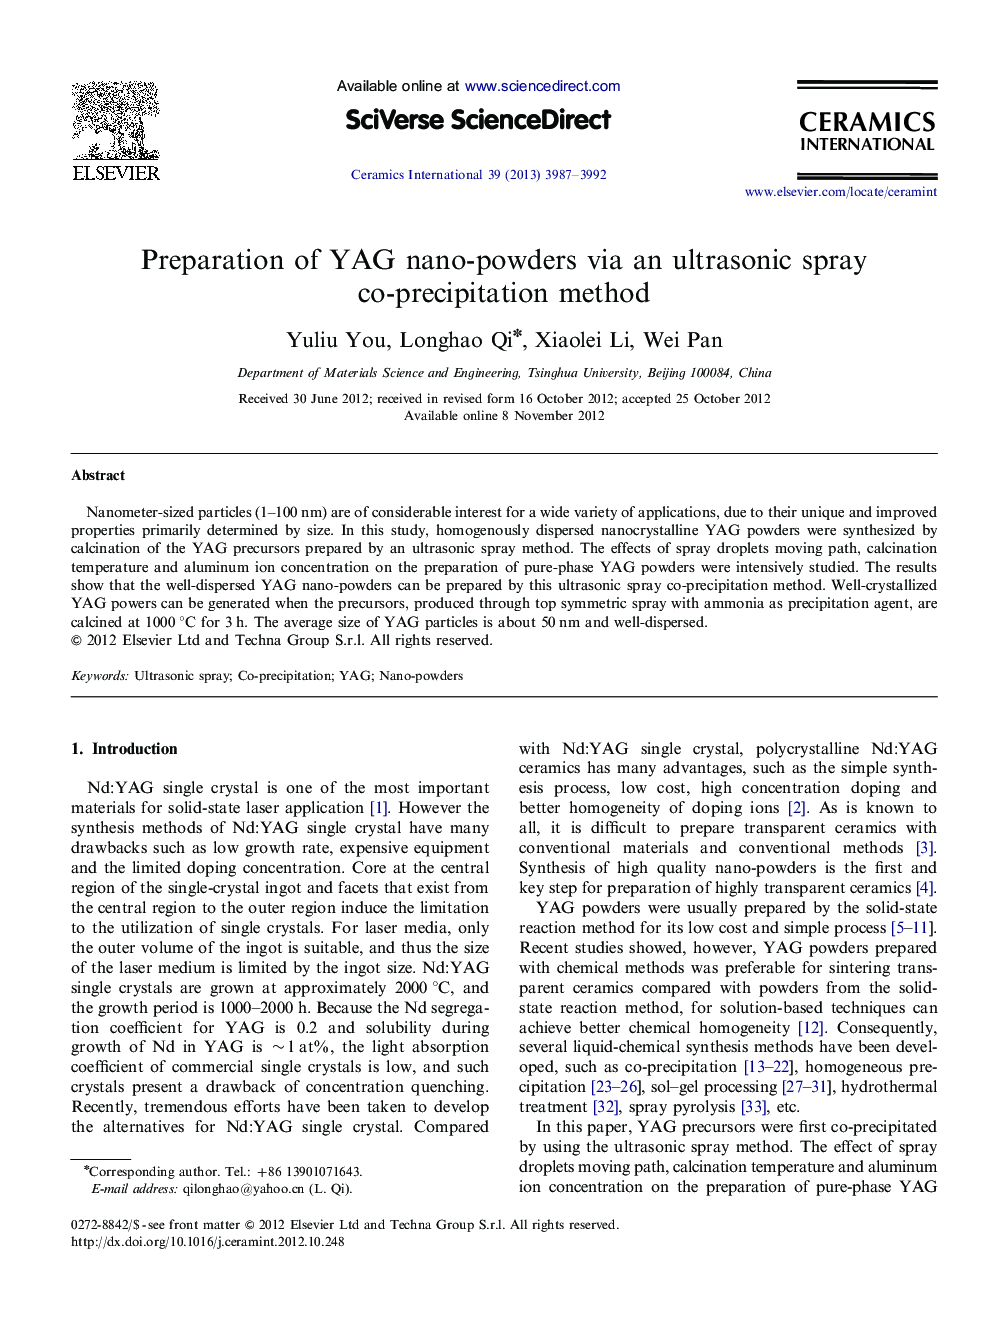 Preparation of YAG nano-powders via an ultrasonic spray co-precipitation method